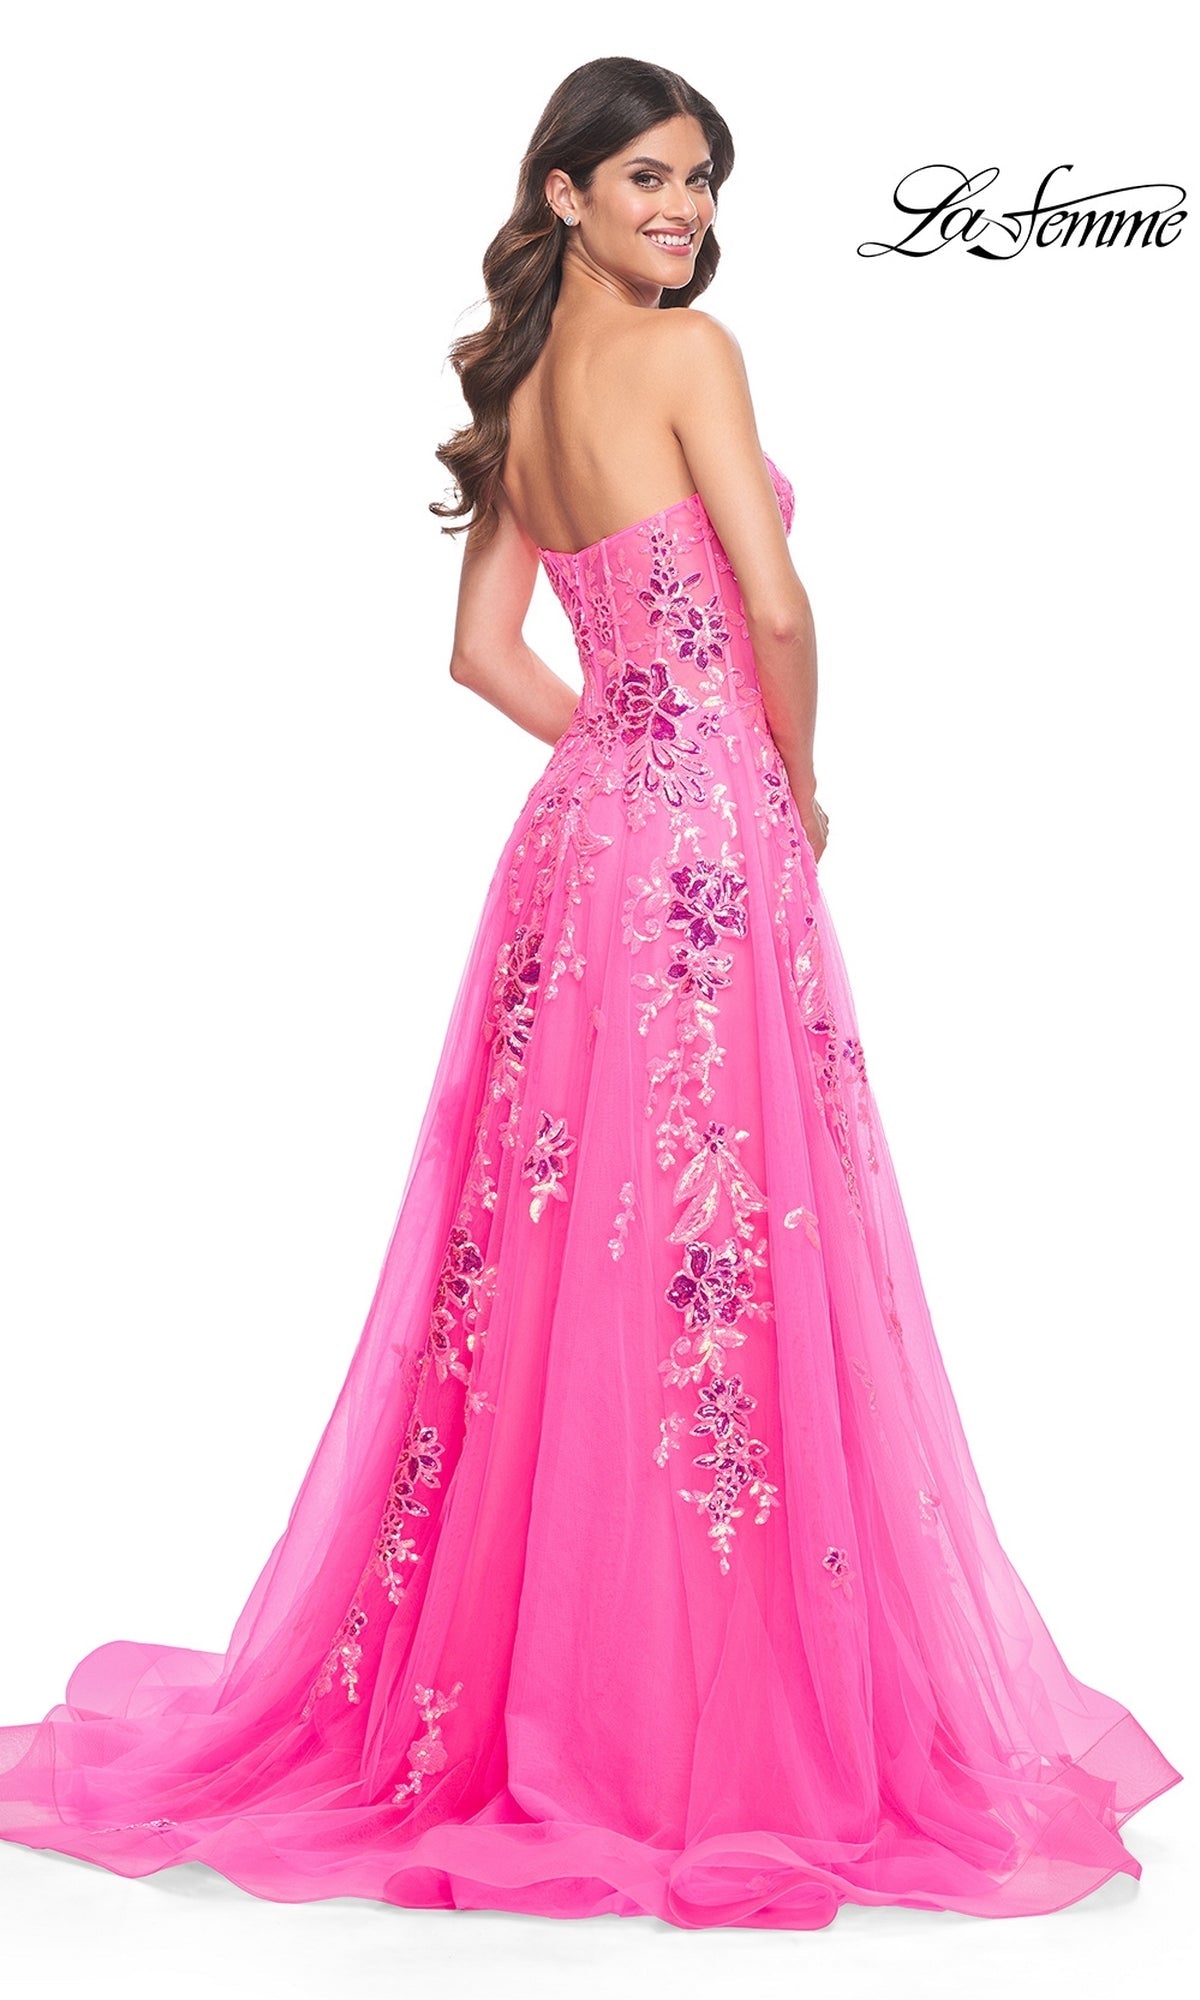  La Femme 32137 Formal Prom Dress